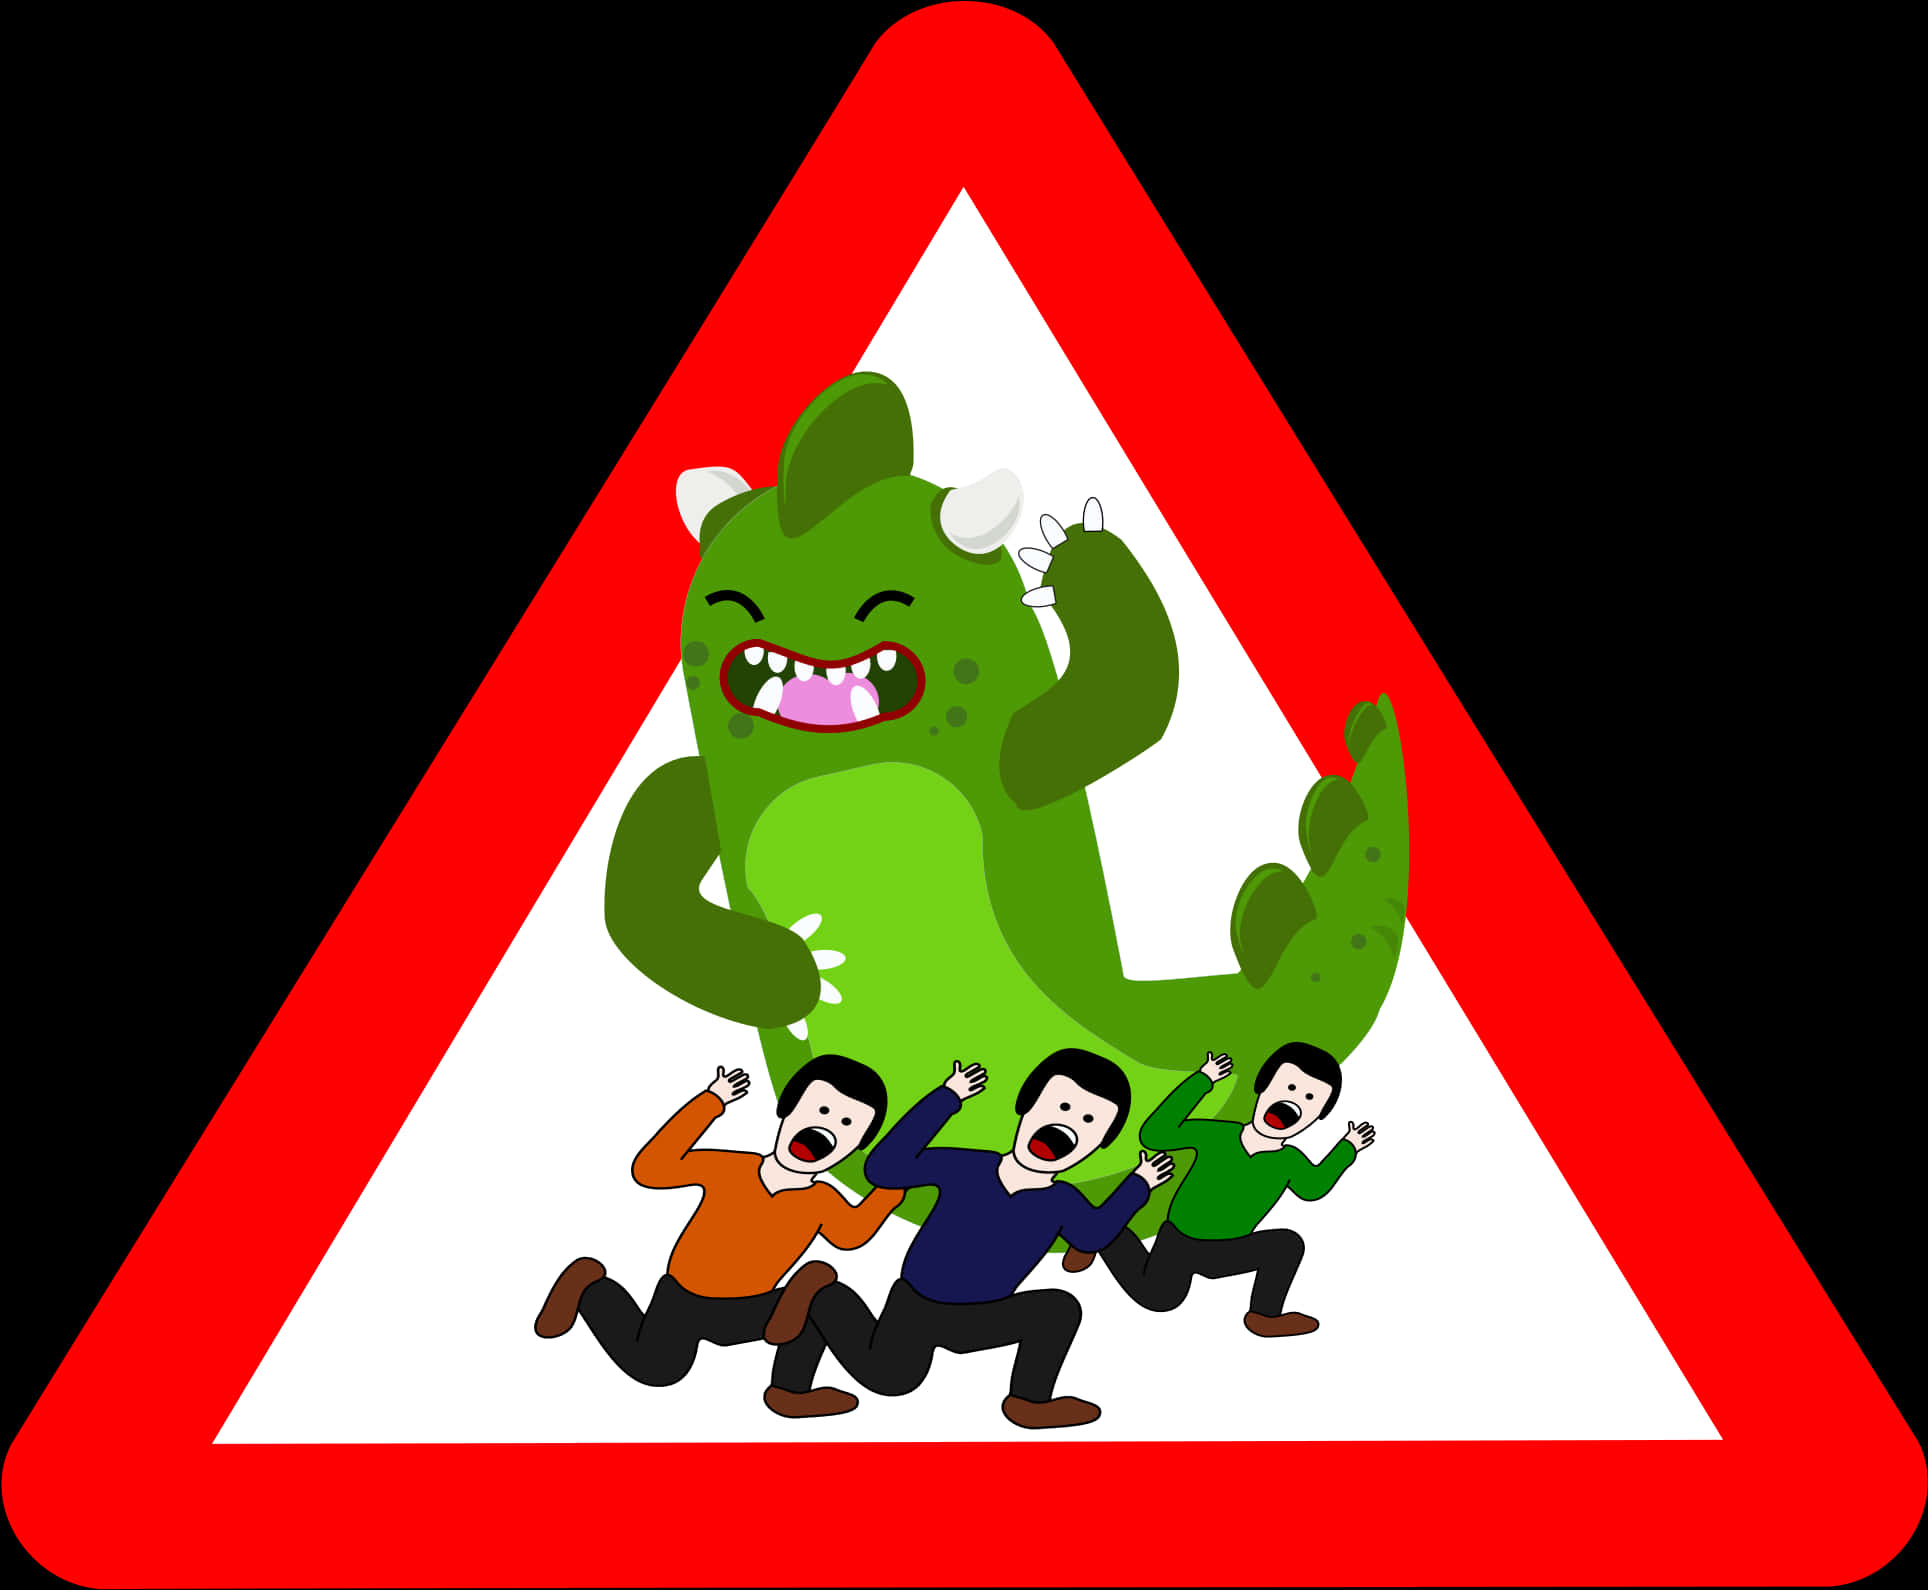 Cartoon Godzilla Chasing People Sign PNG